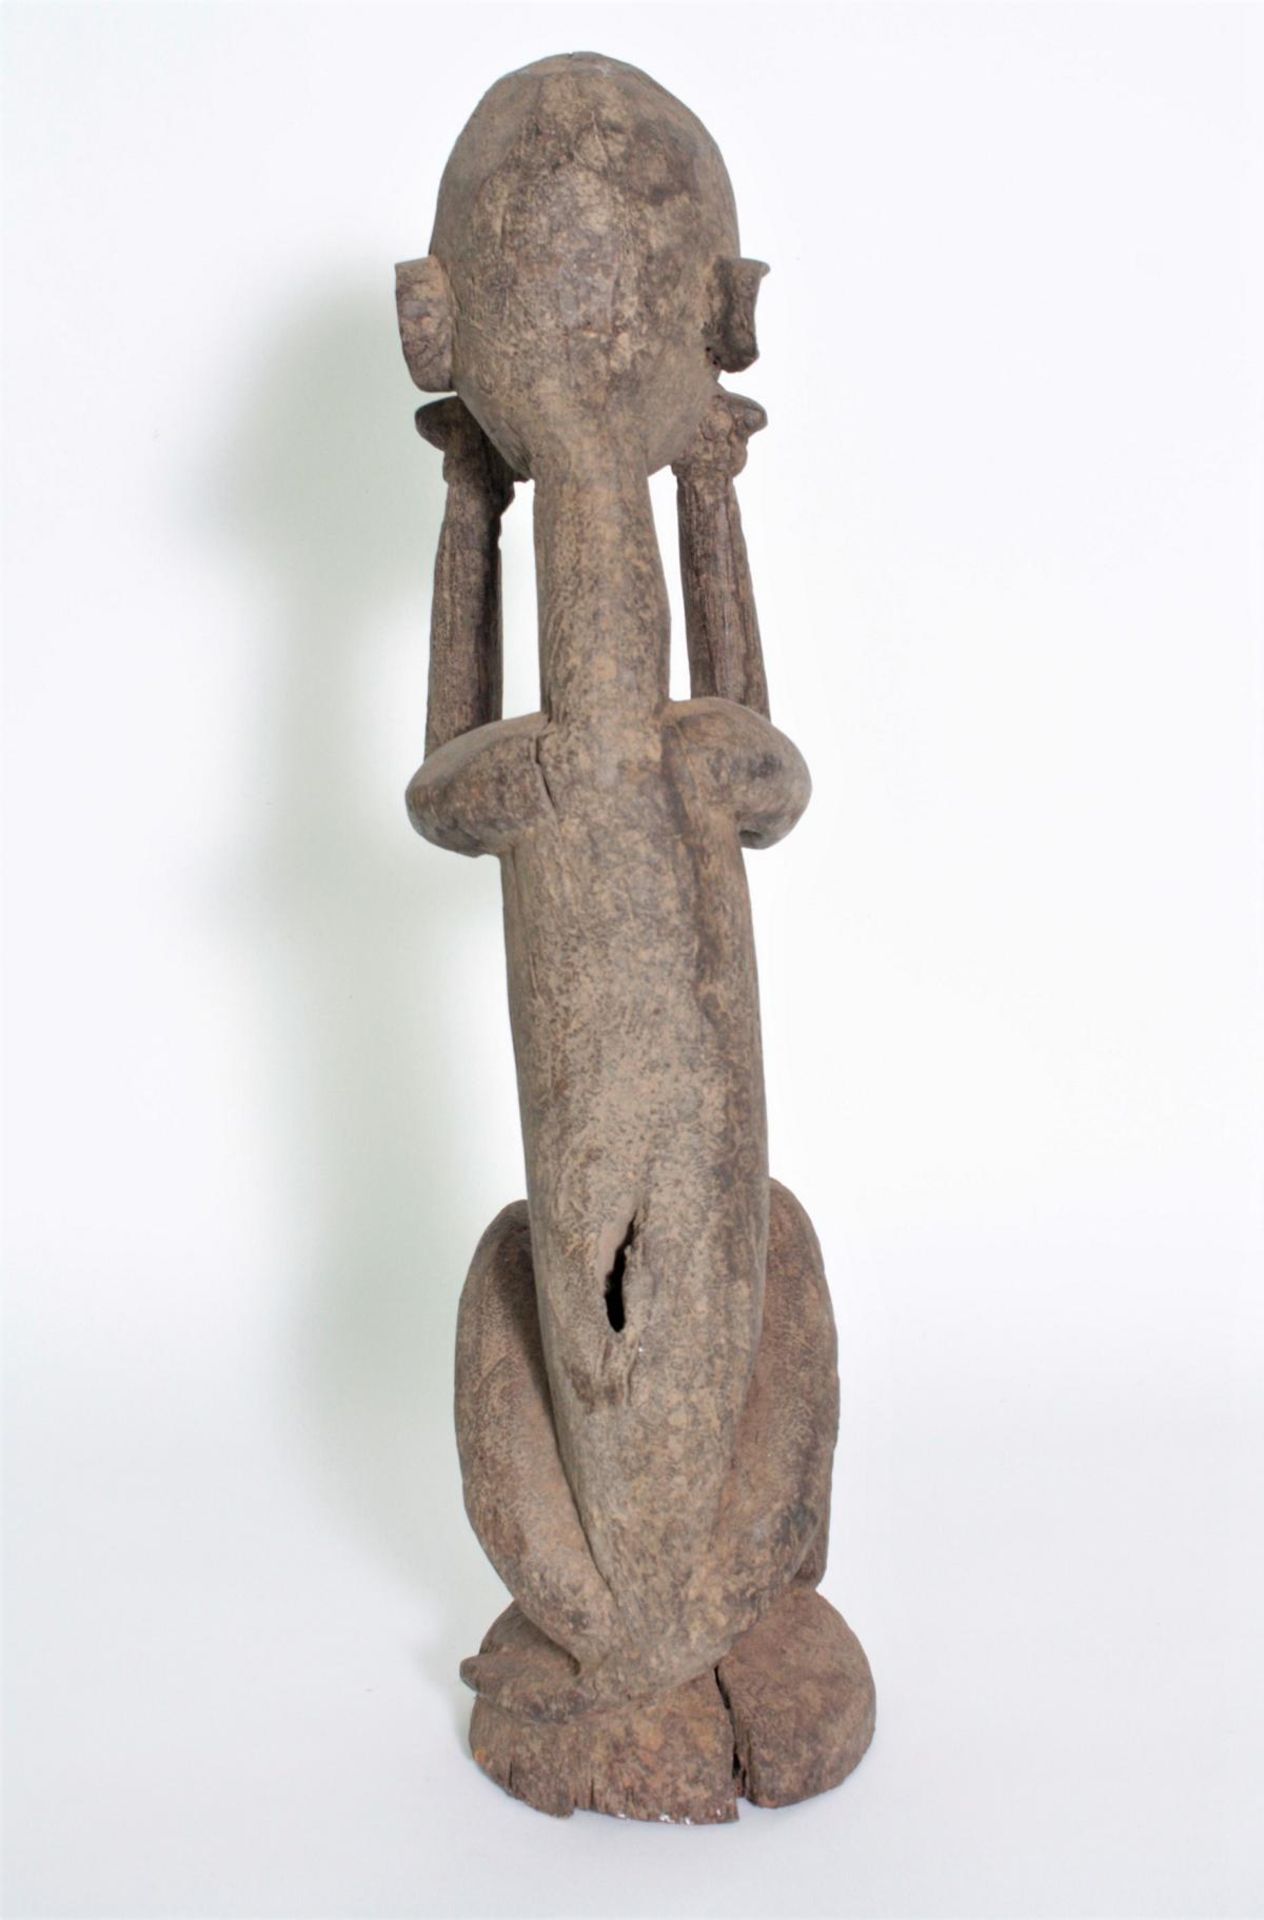 Hockende zoomorphe Figur, wohl Lobi, Burkina Faso, 1. Hälfte 20. Jh. - Image 3 of 10